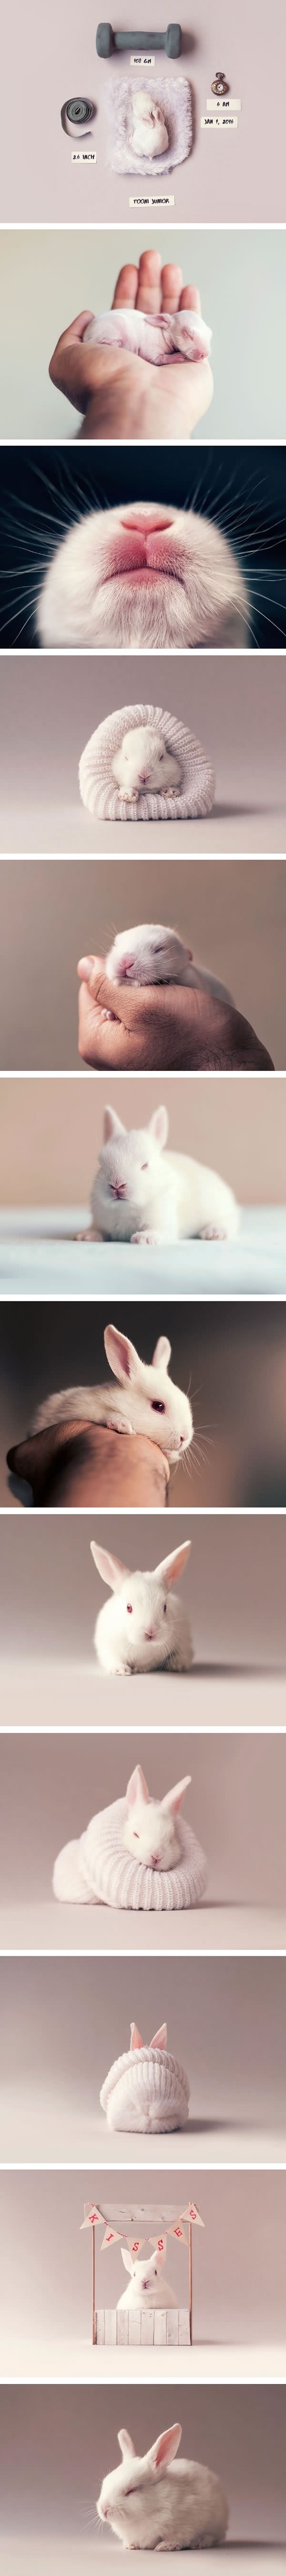 Baby photoshoot of a newborn bunny